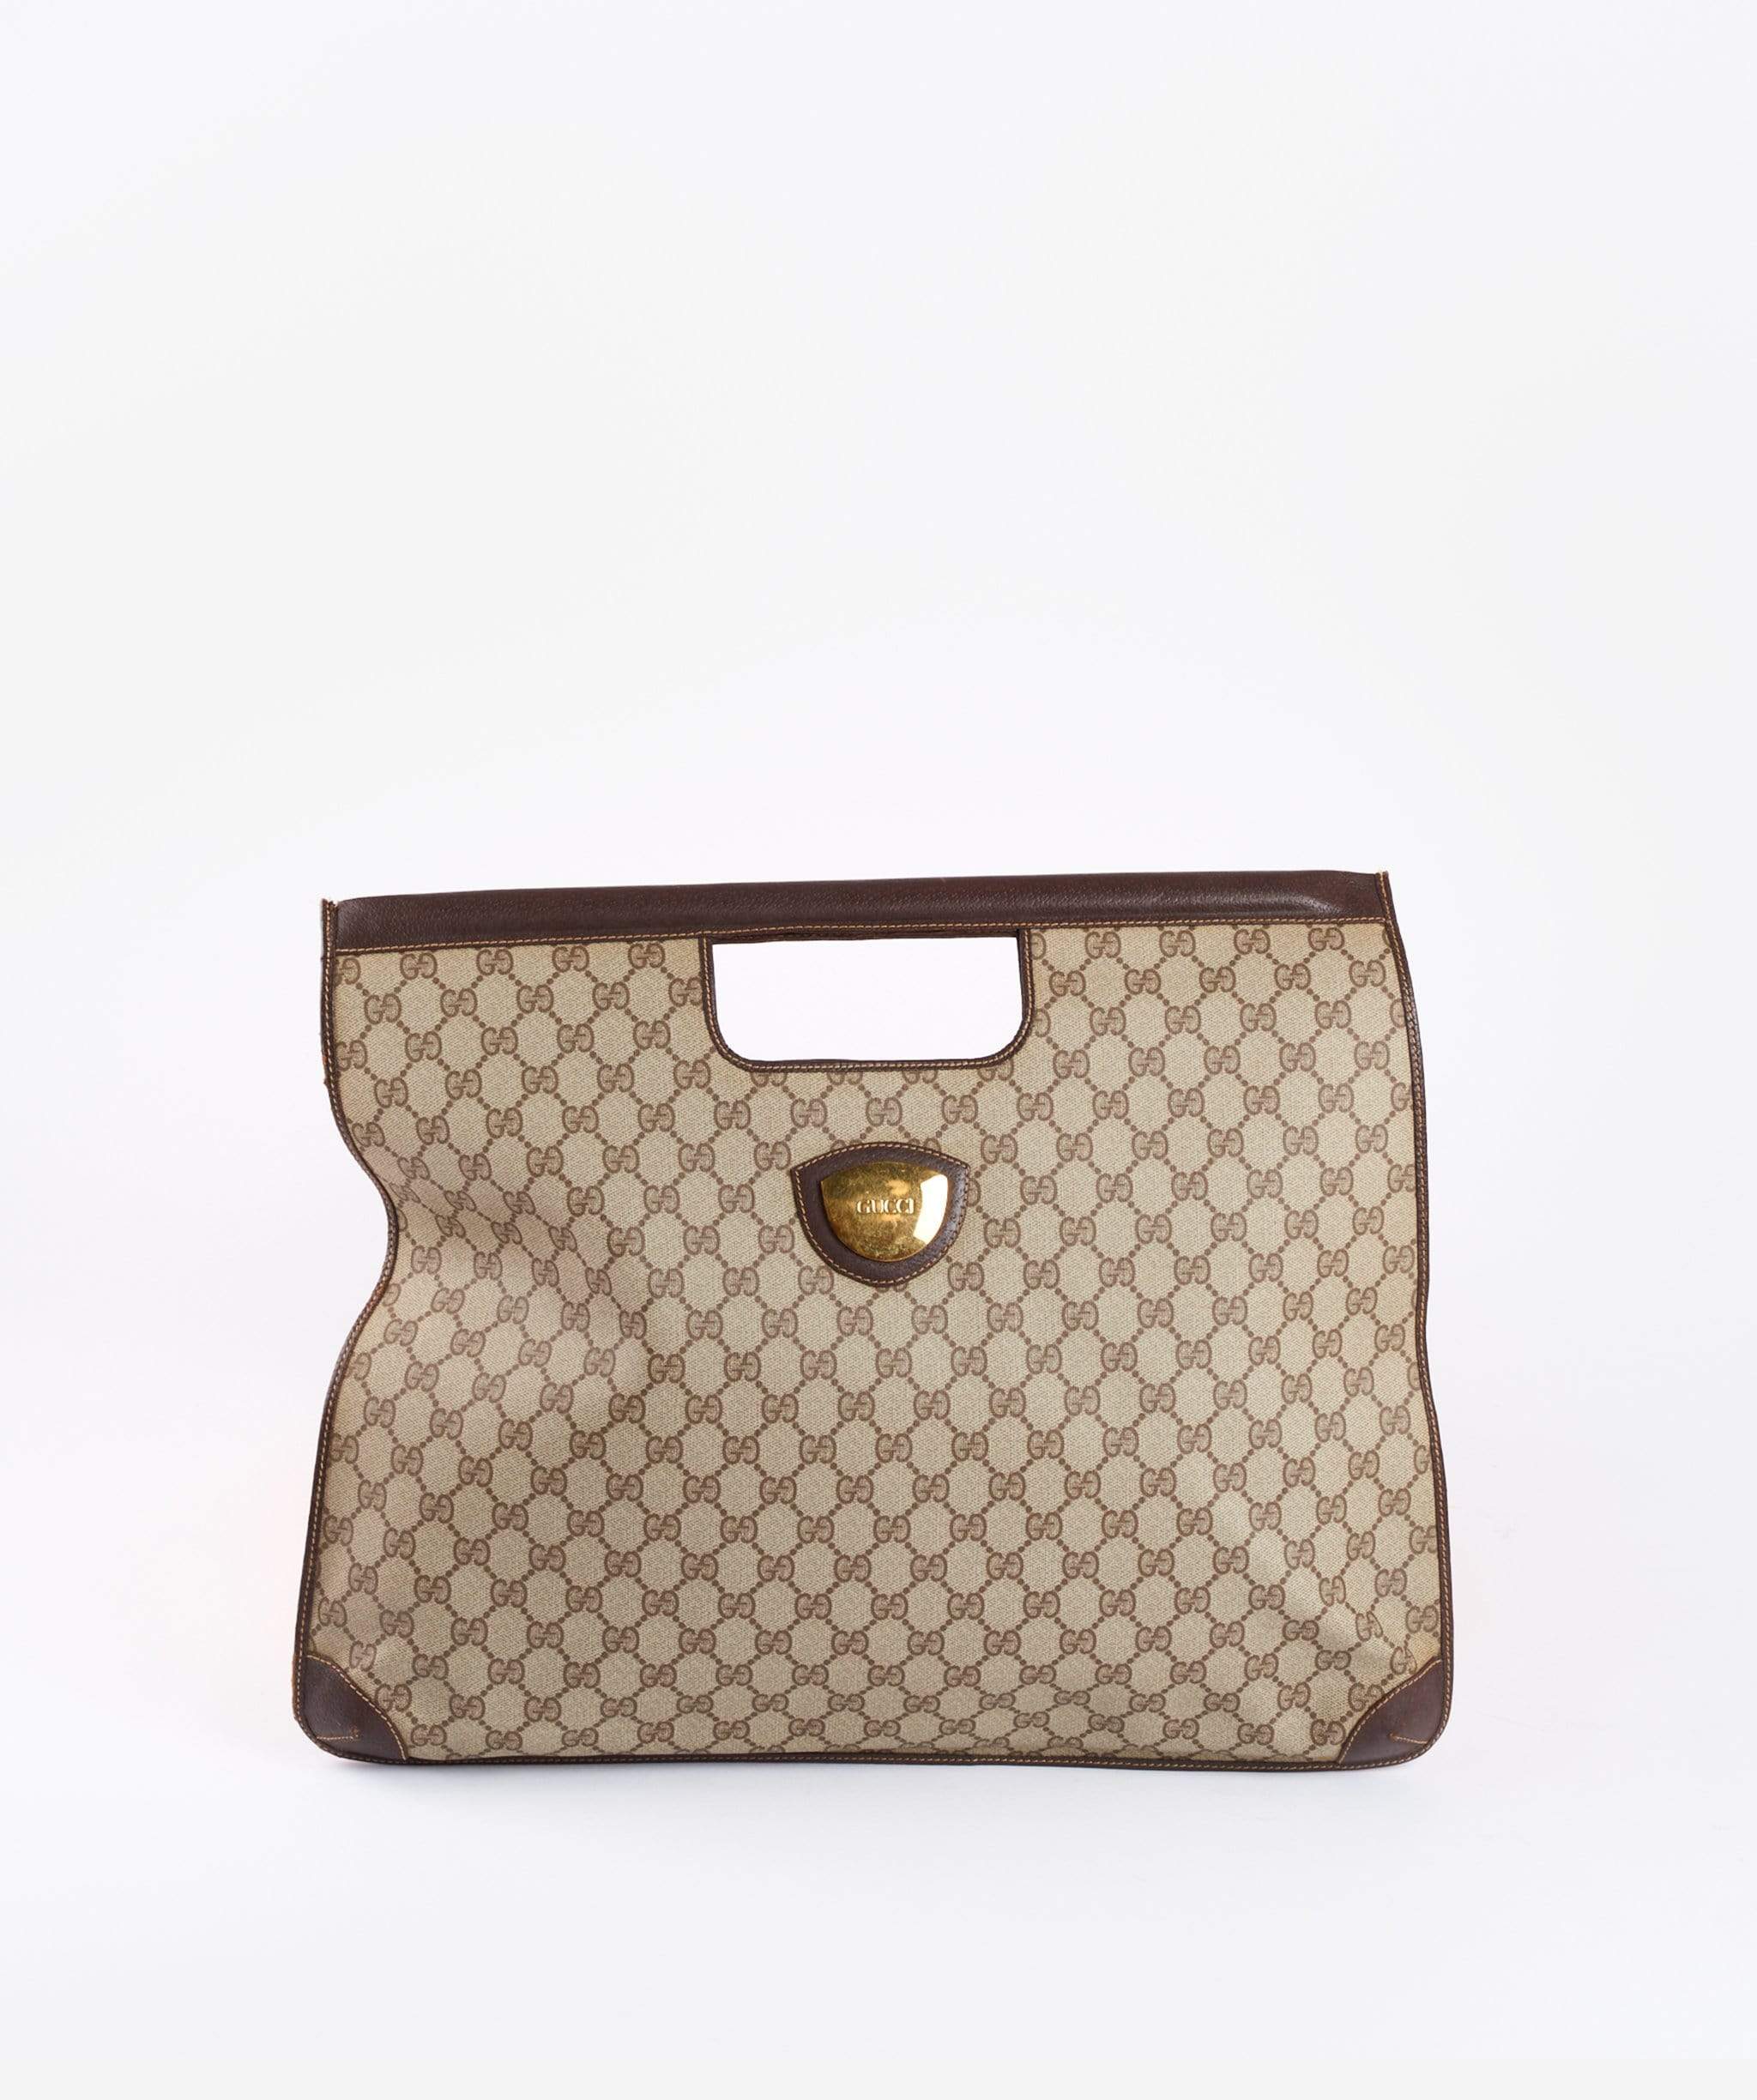 Gucci GUCCI GG Canvas Flat Hand Bag PVC Leather